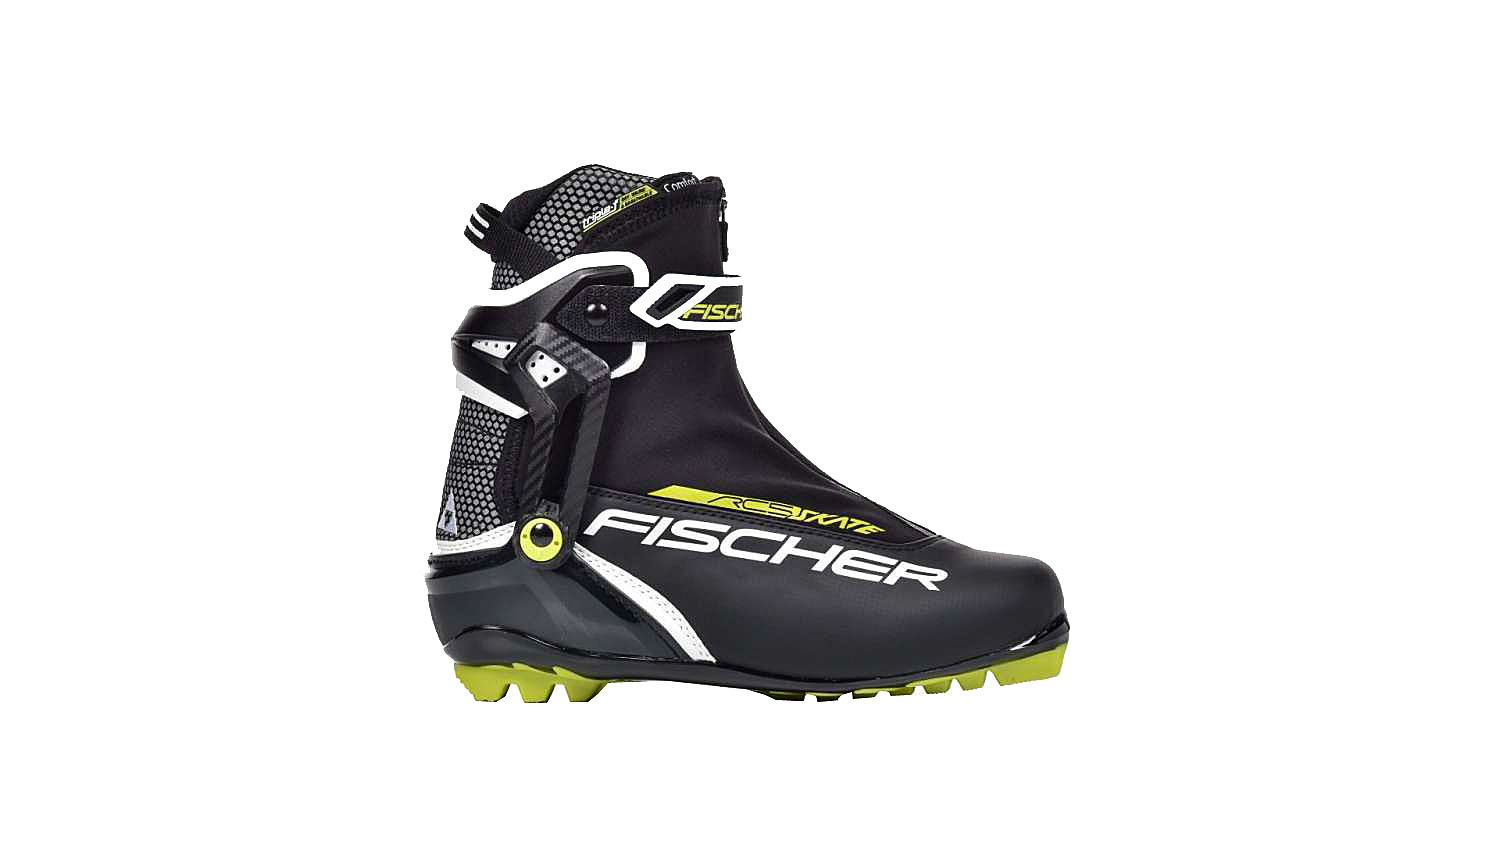 Ботинки лыжные FISCHER  RC 5 SKATE 17/18 S15417 44р